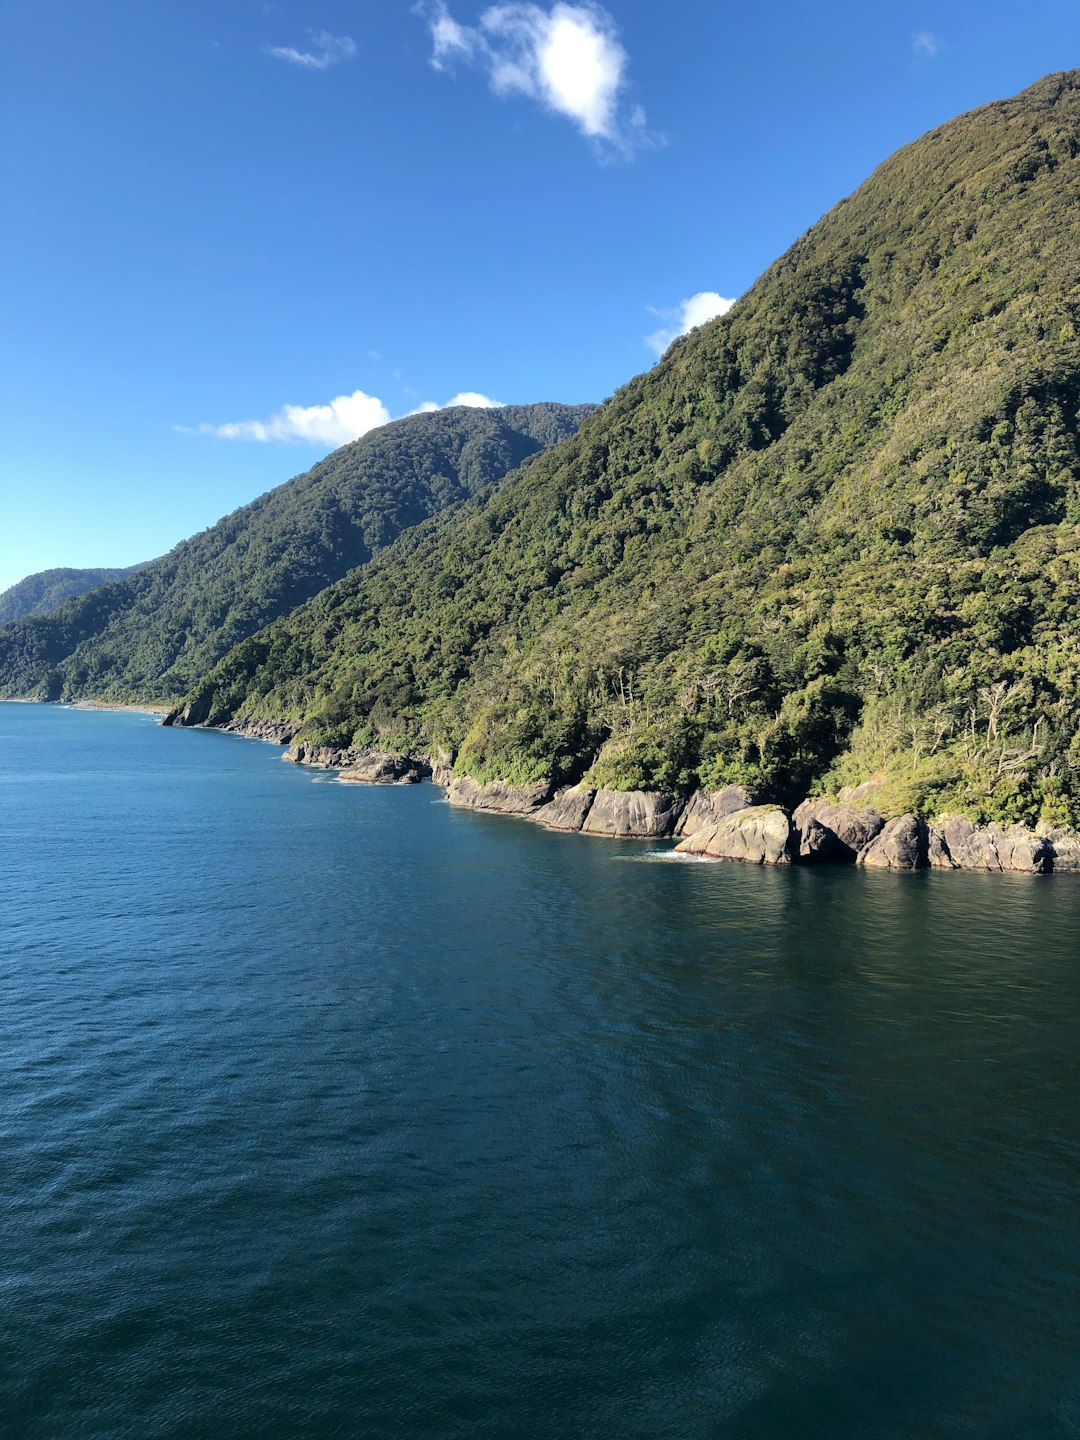 Travel Tips and Stories of Te Wahipounamu in New Zealand